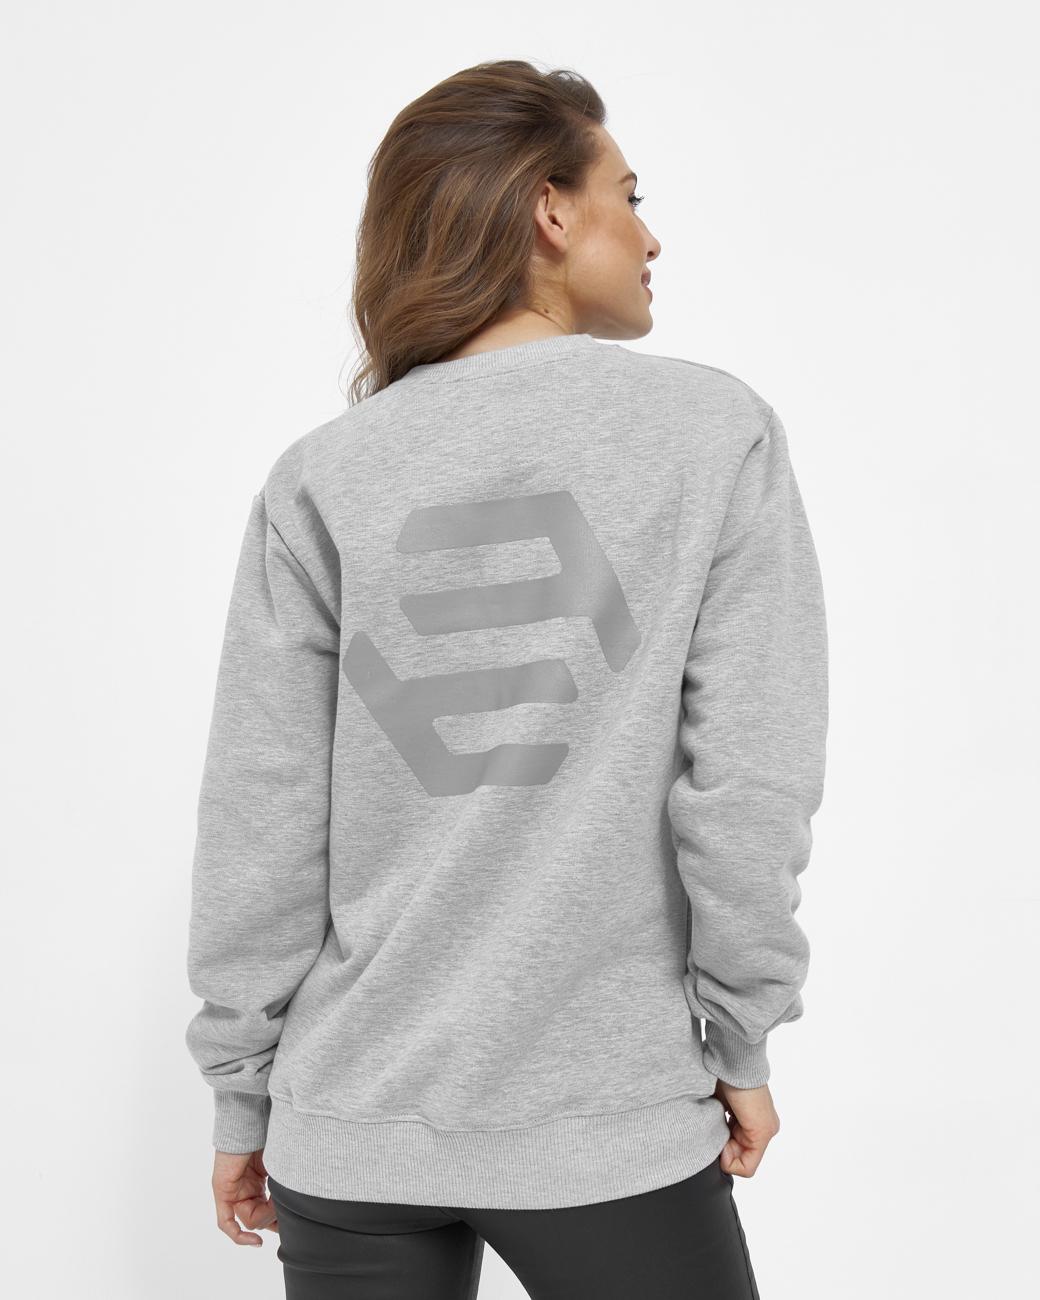 Sweatshirt SOFTFLIX grey L